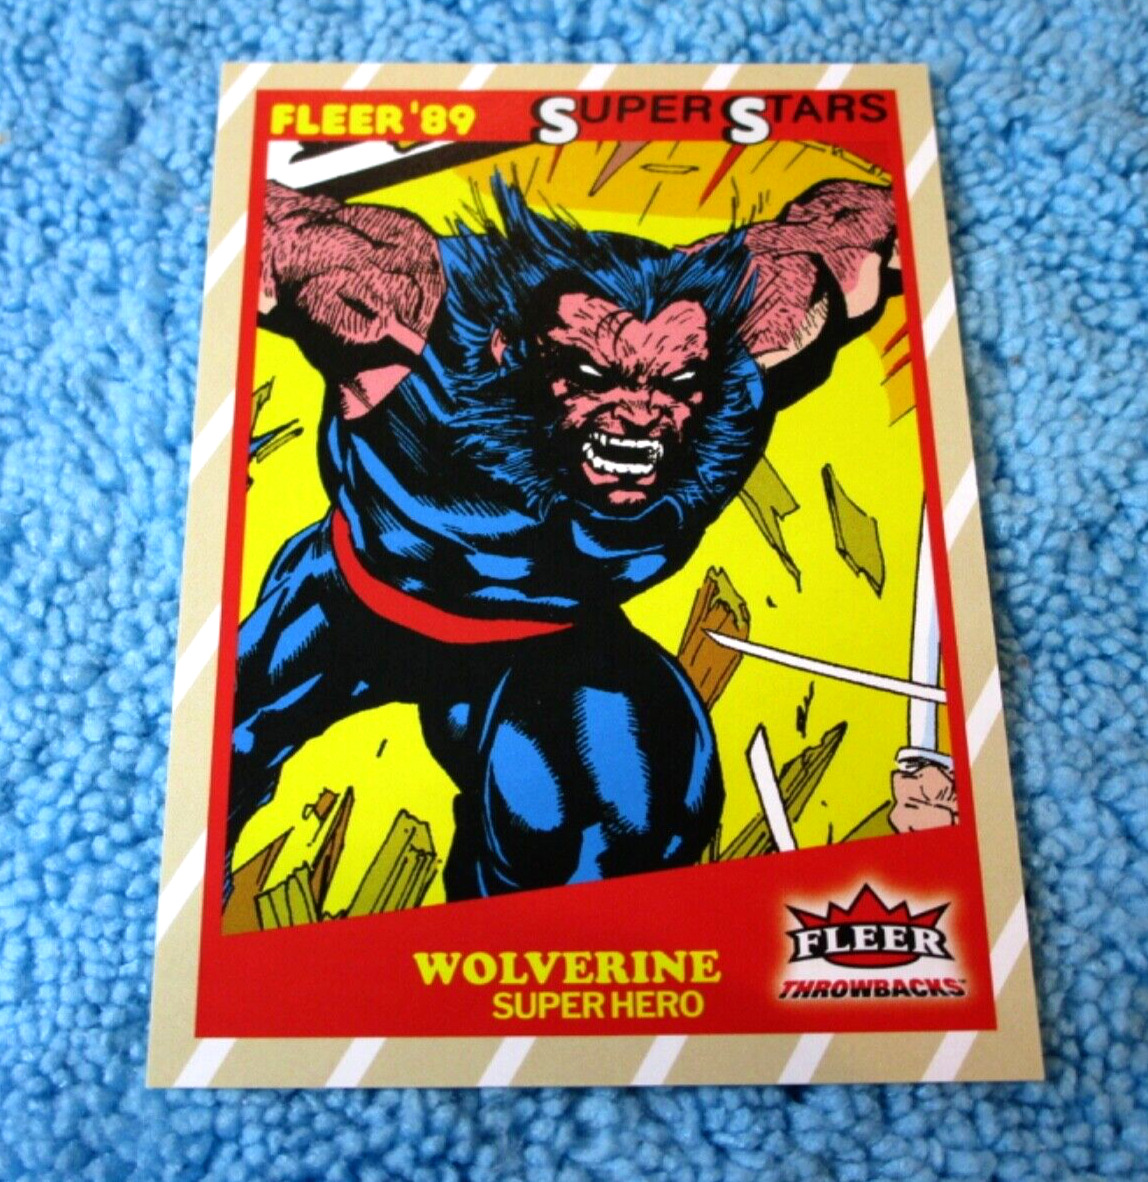 2023 Fleer Throwbacks '89 Marvel Edition WOLVERINE Super Stars Insert SS-6